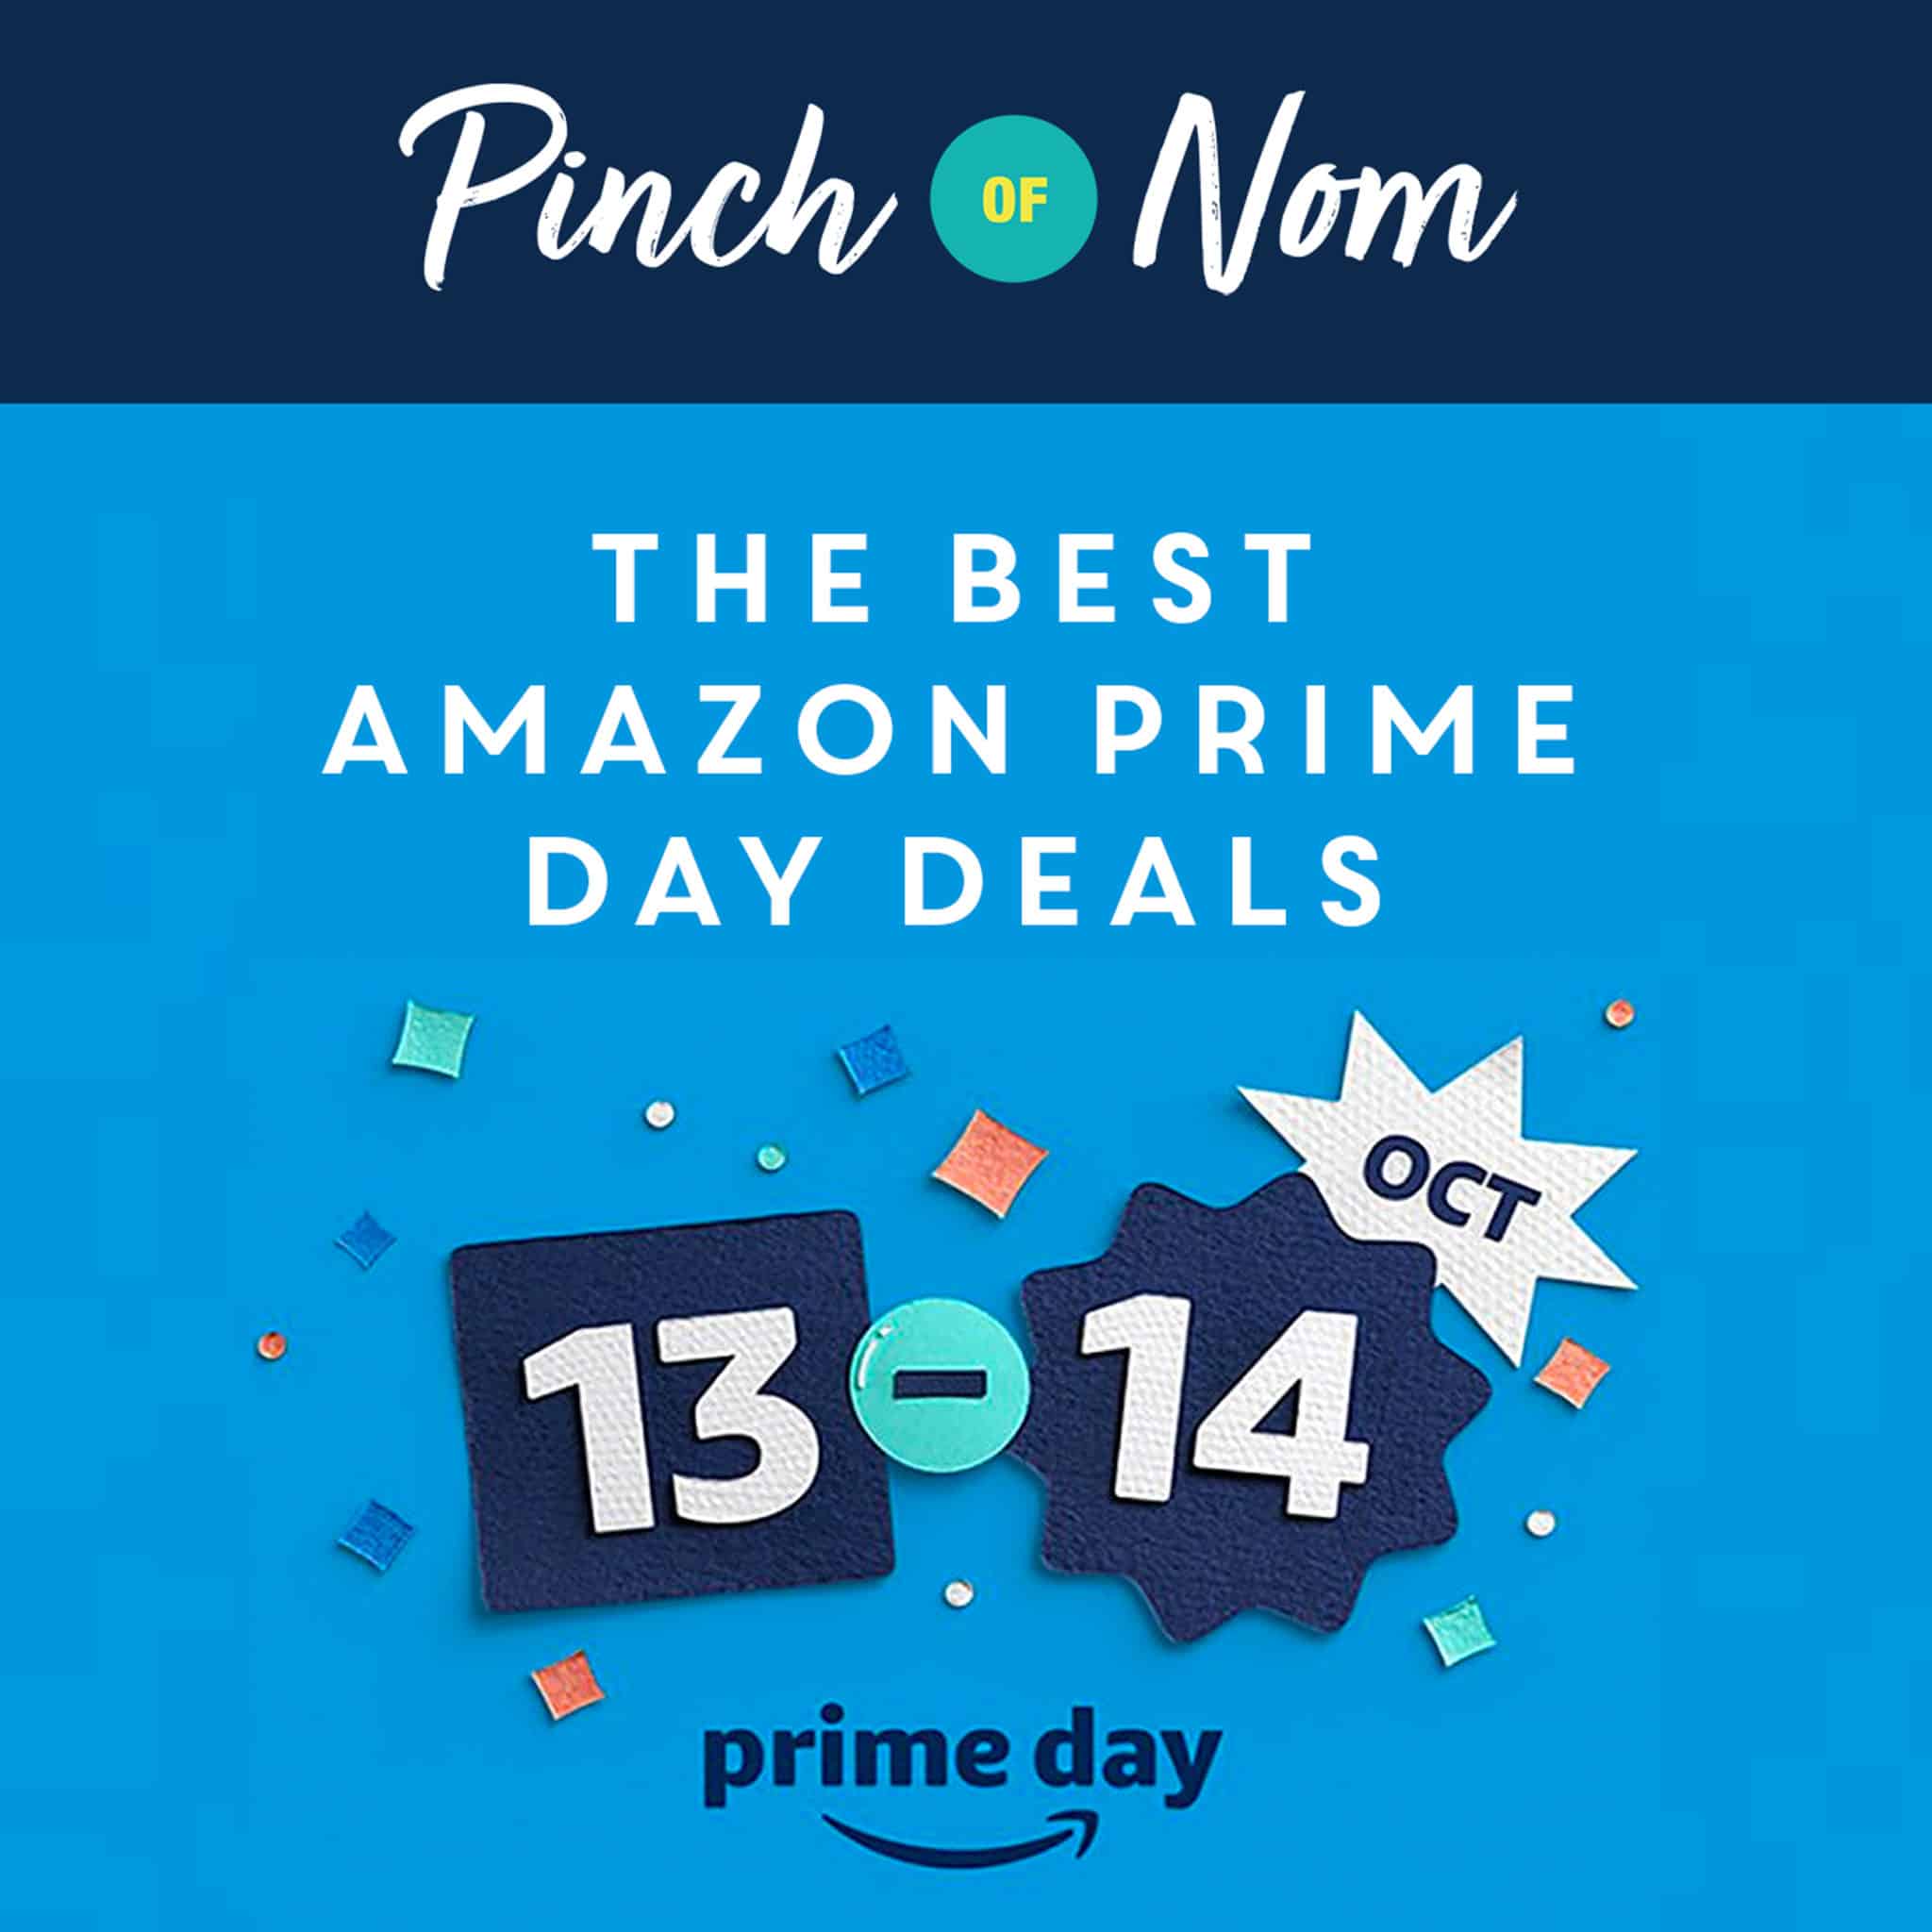 The Best Amazon Prime Day Deals 2020 pinchofnom.com